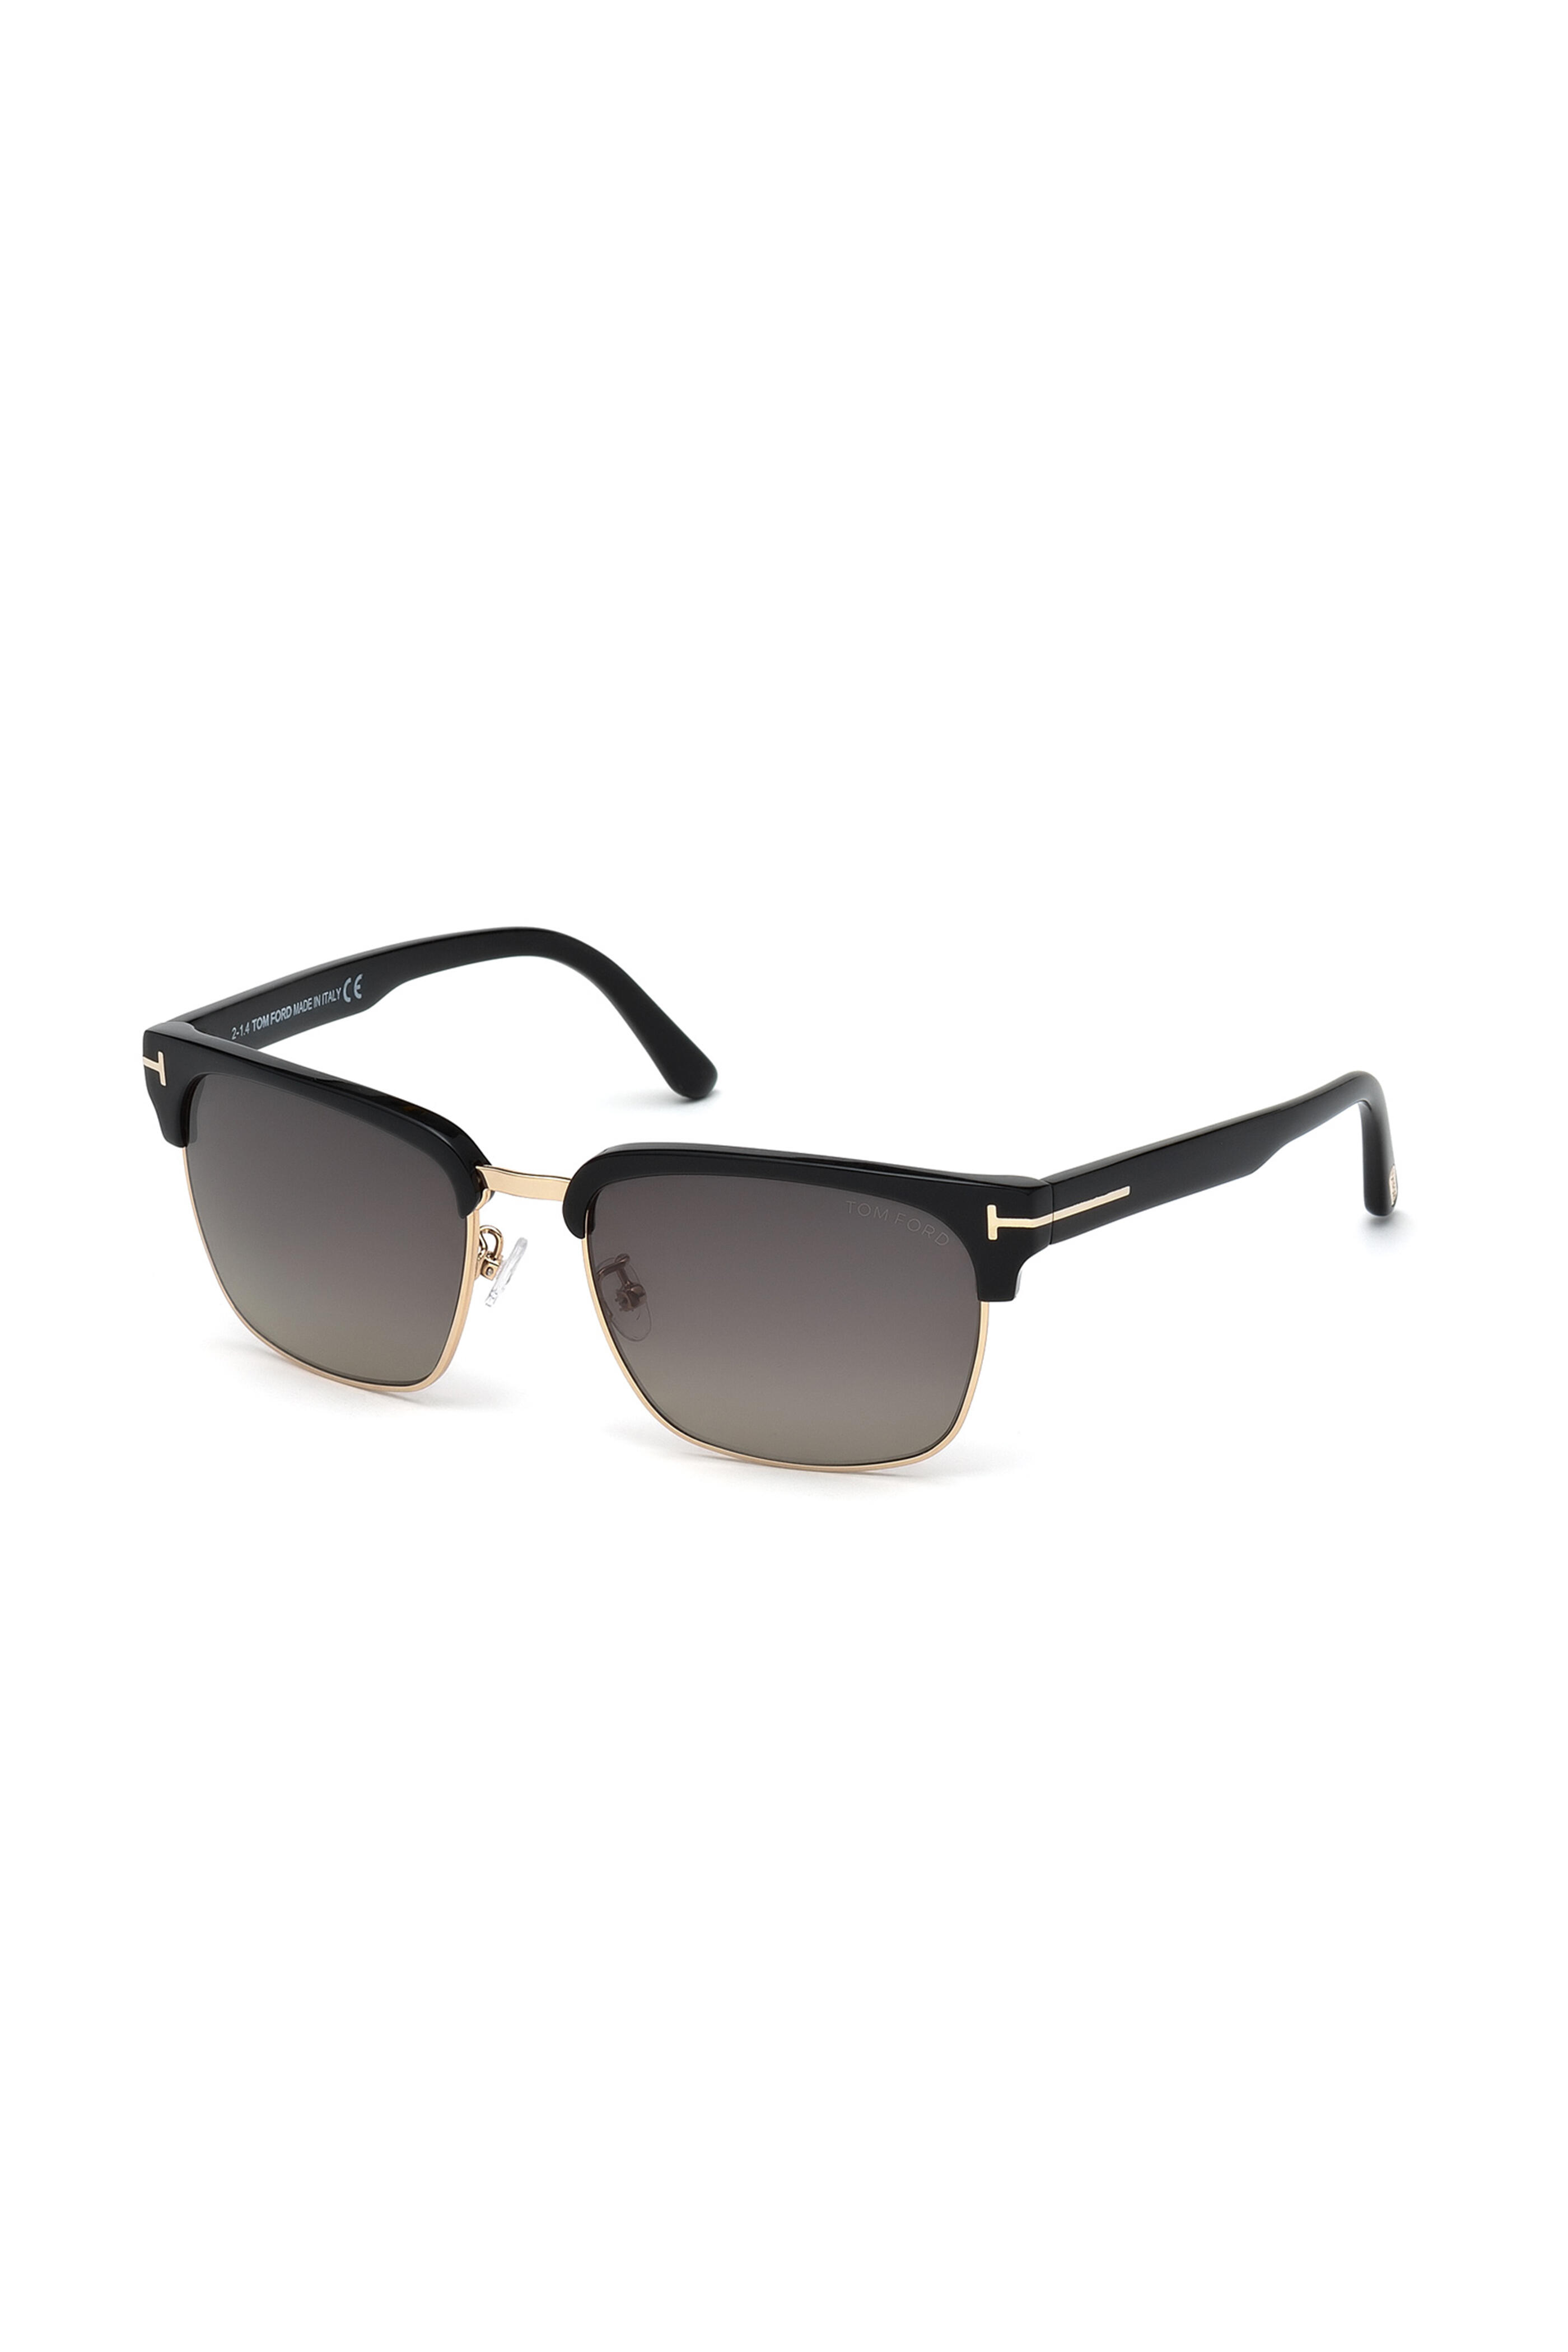 Tom Ford Eyewear - River Black Polarized Vintage Square Sunglasses